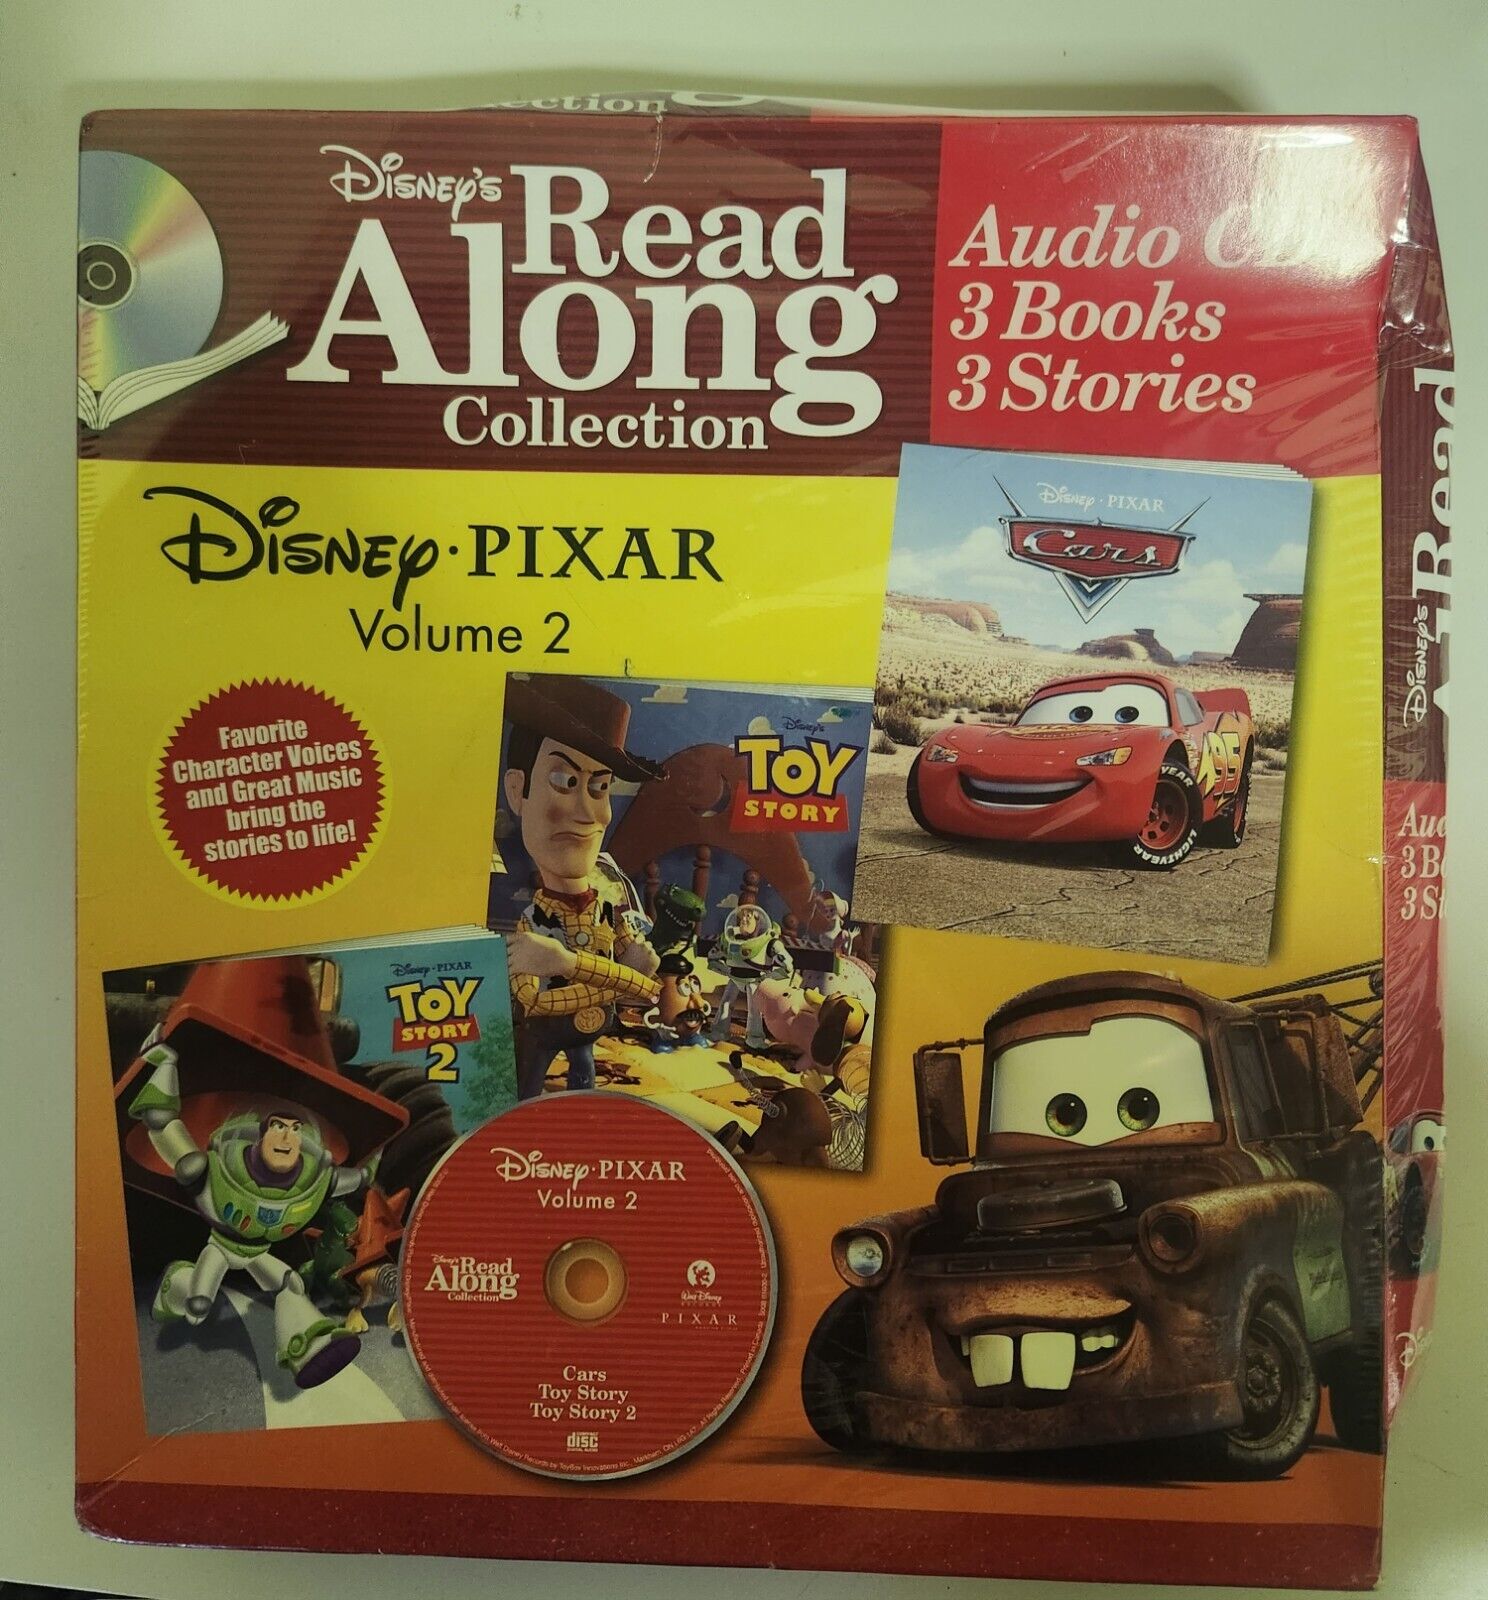 Disney\'s Pixar Vol. 2 Collection: Cars, Toy Story 1 & 2 (Disney\'s Read Along CD)